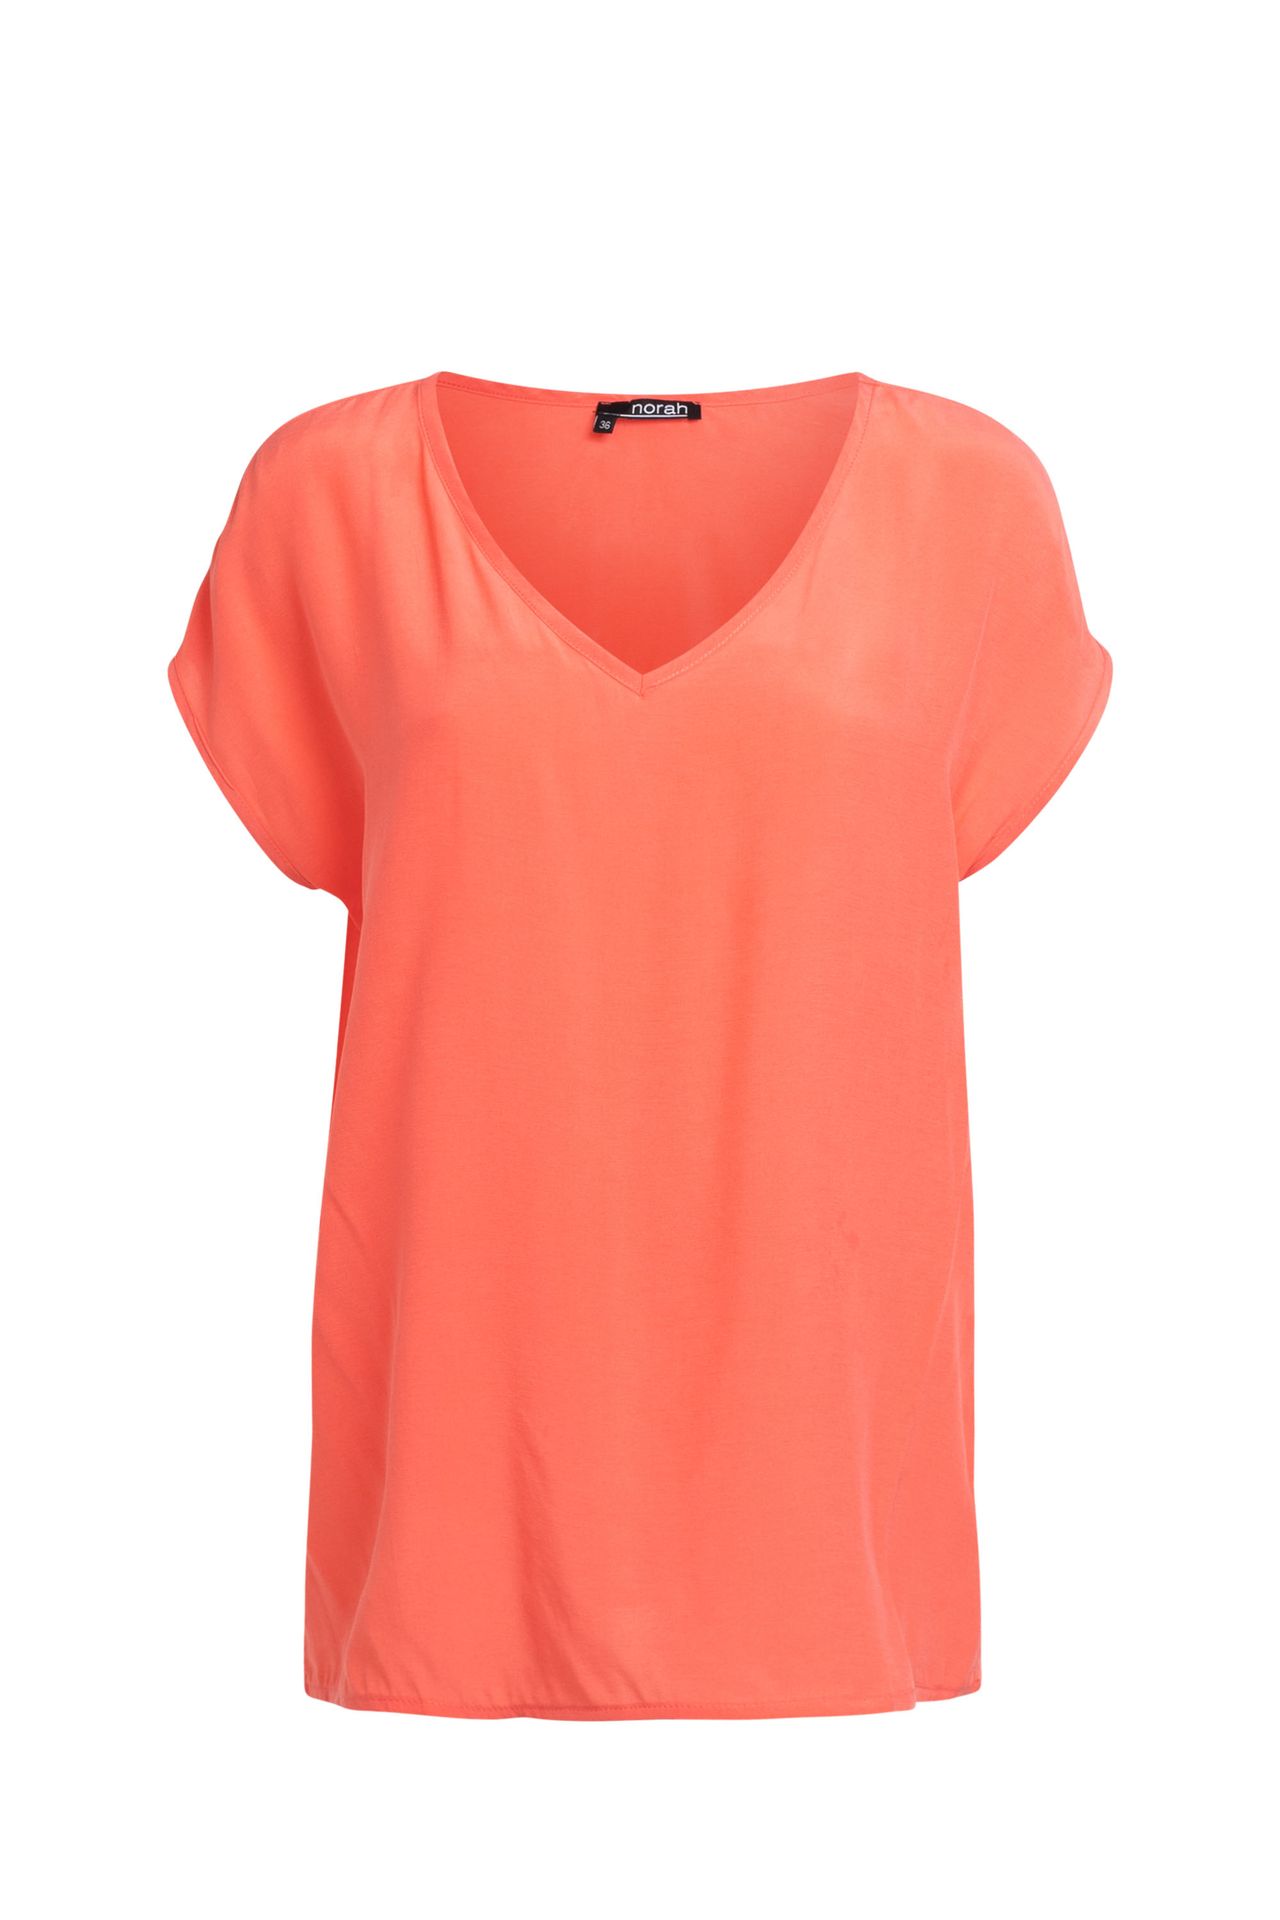 Norah Shirt oranje coral 209191-706